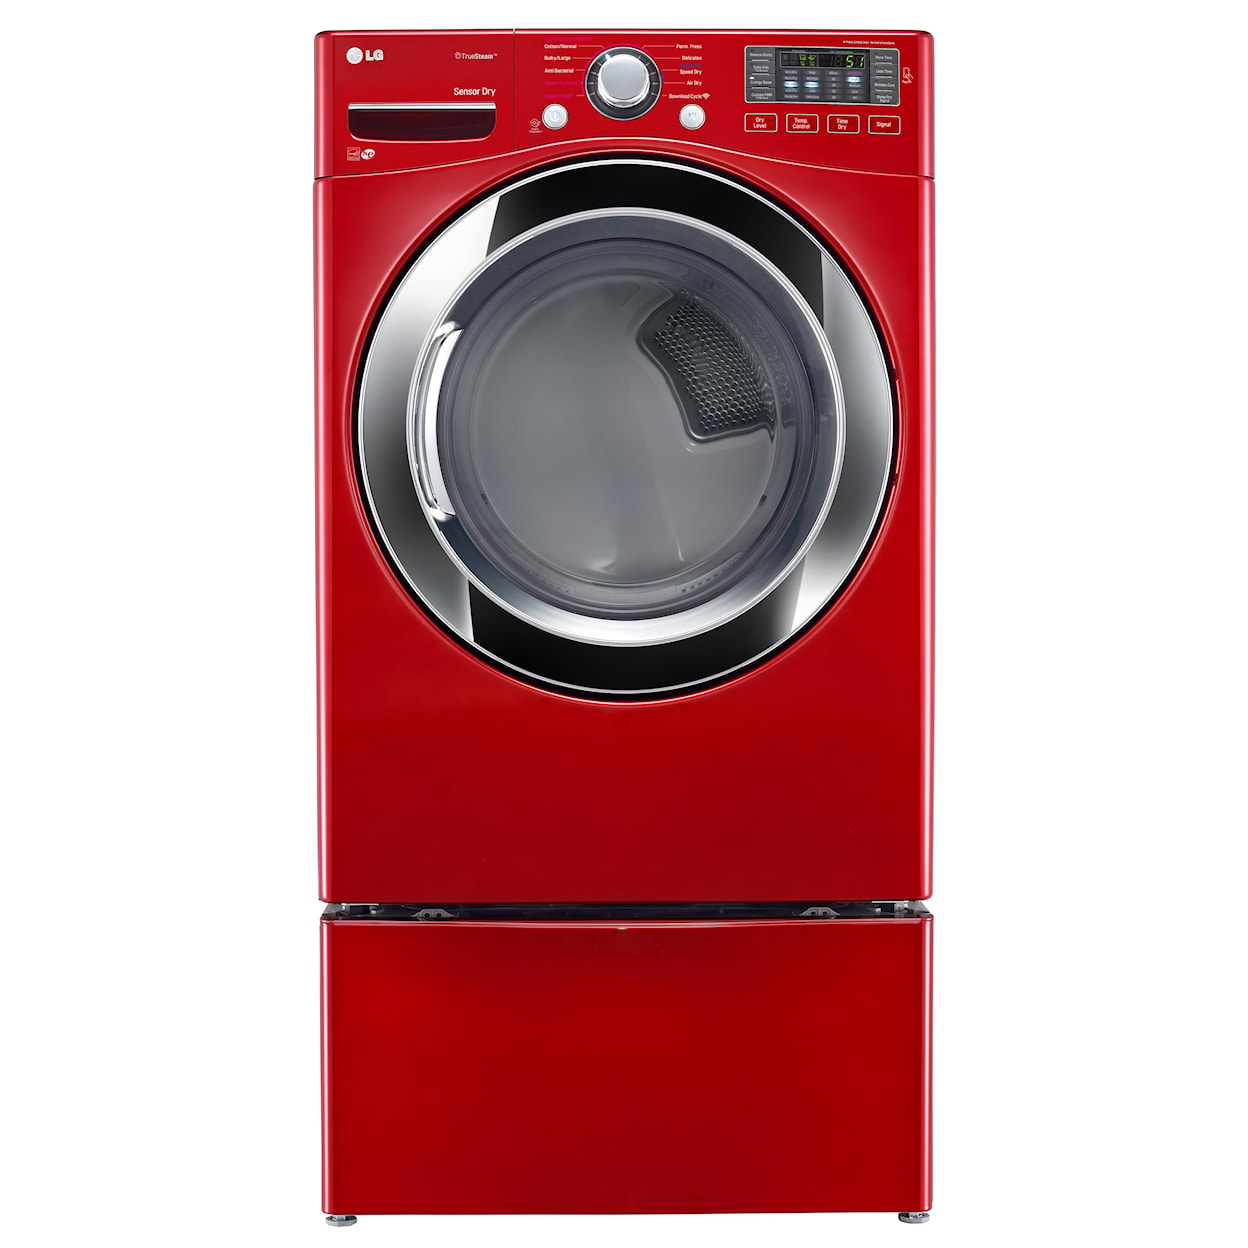 LG Appliances Dryers 7.4 cu. ft. Front Load Electric Dryer